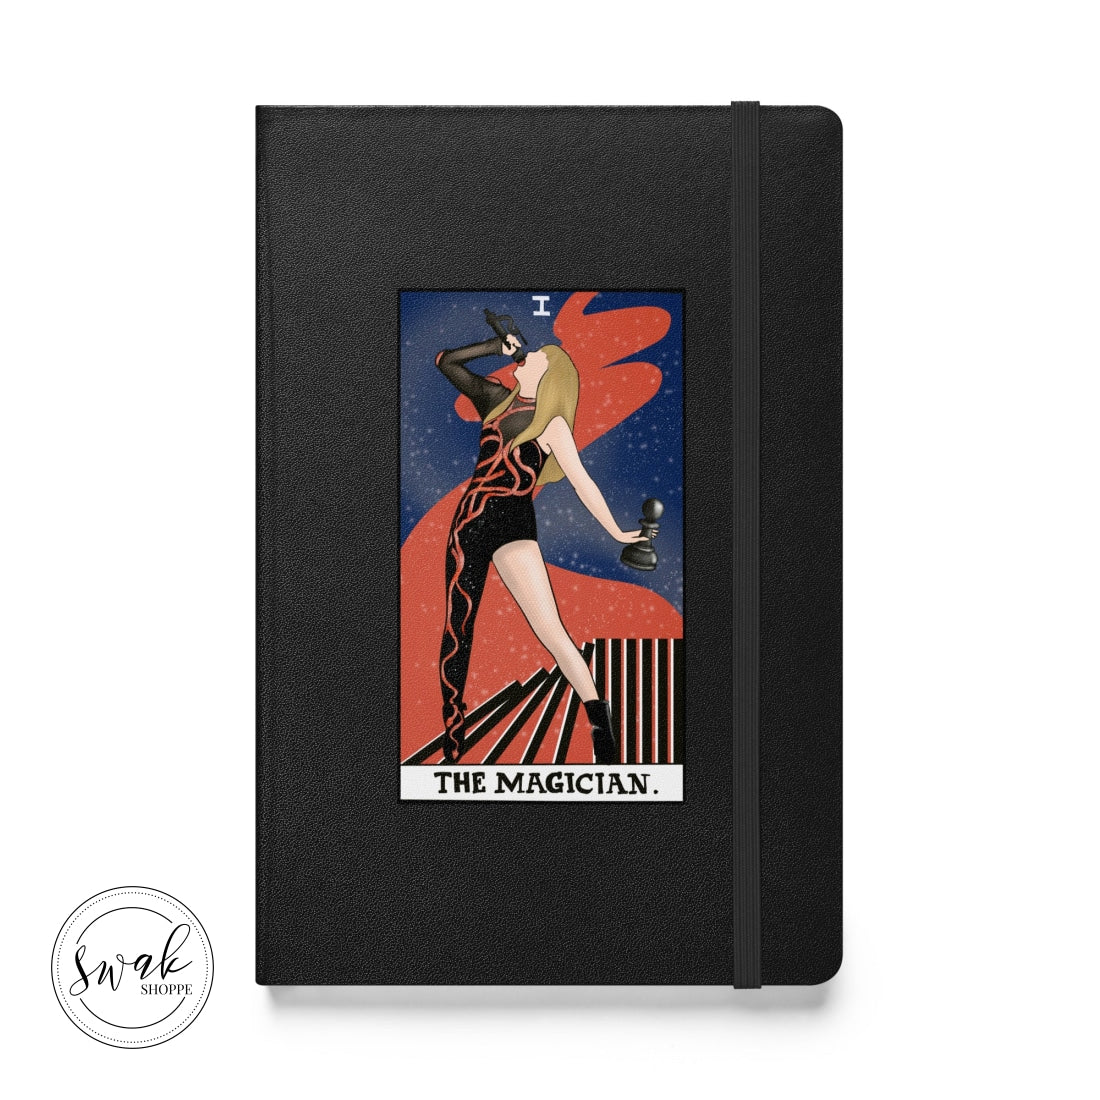 Taylor + Tarot The Magician Hardcover Bound Notebook Black